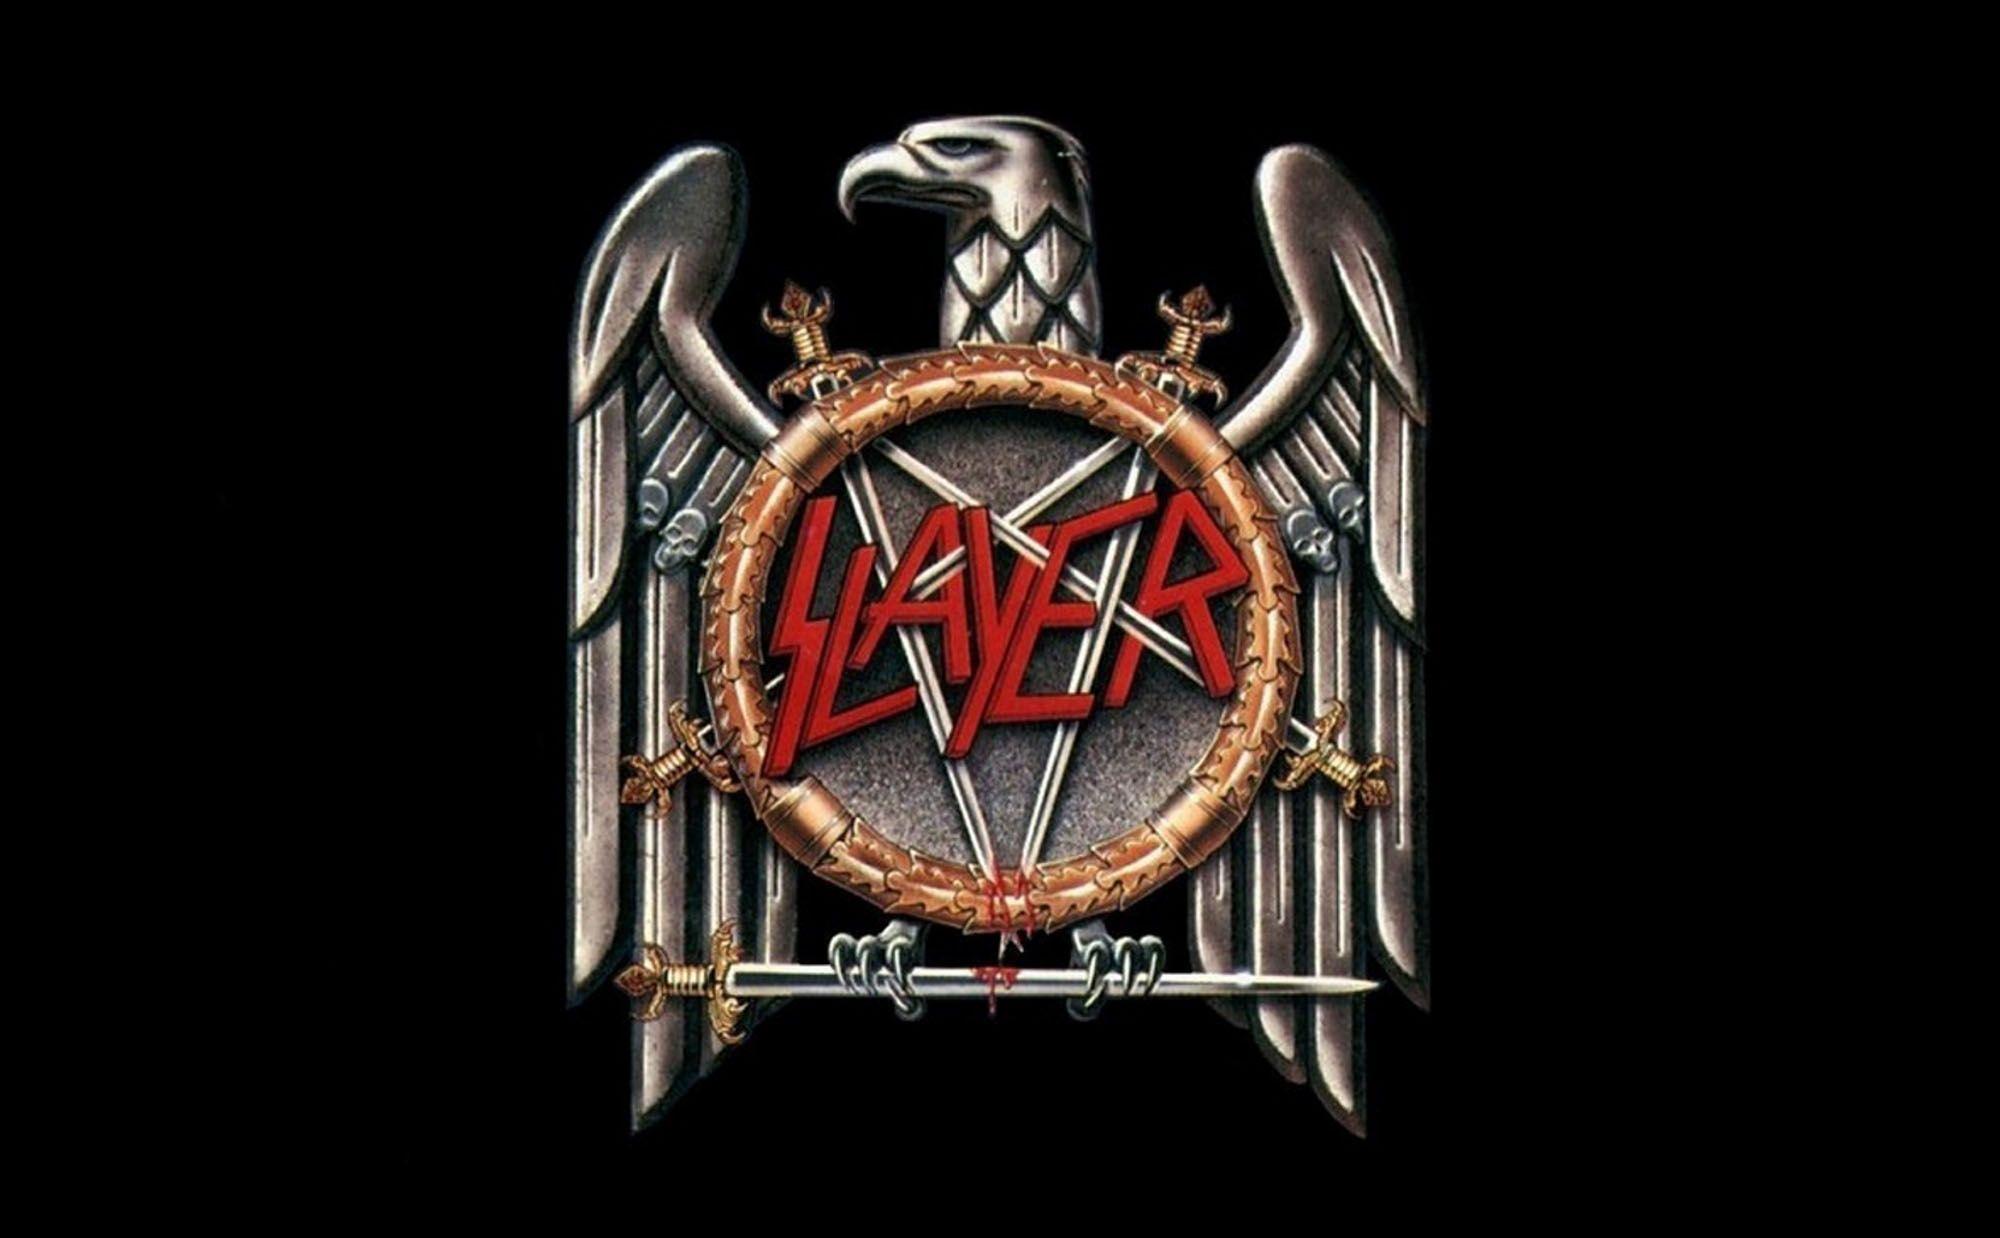 Slayer Logo - Slayer Logo, Slayer Symbol, Meaning, History and Evolution